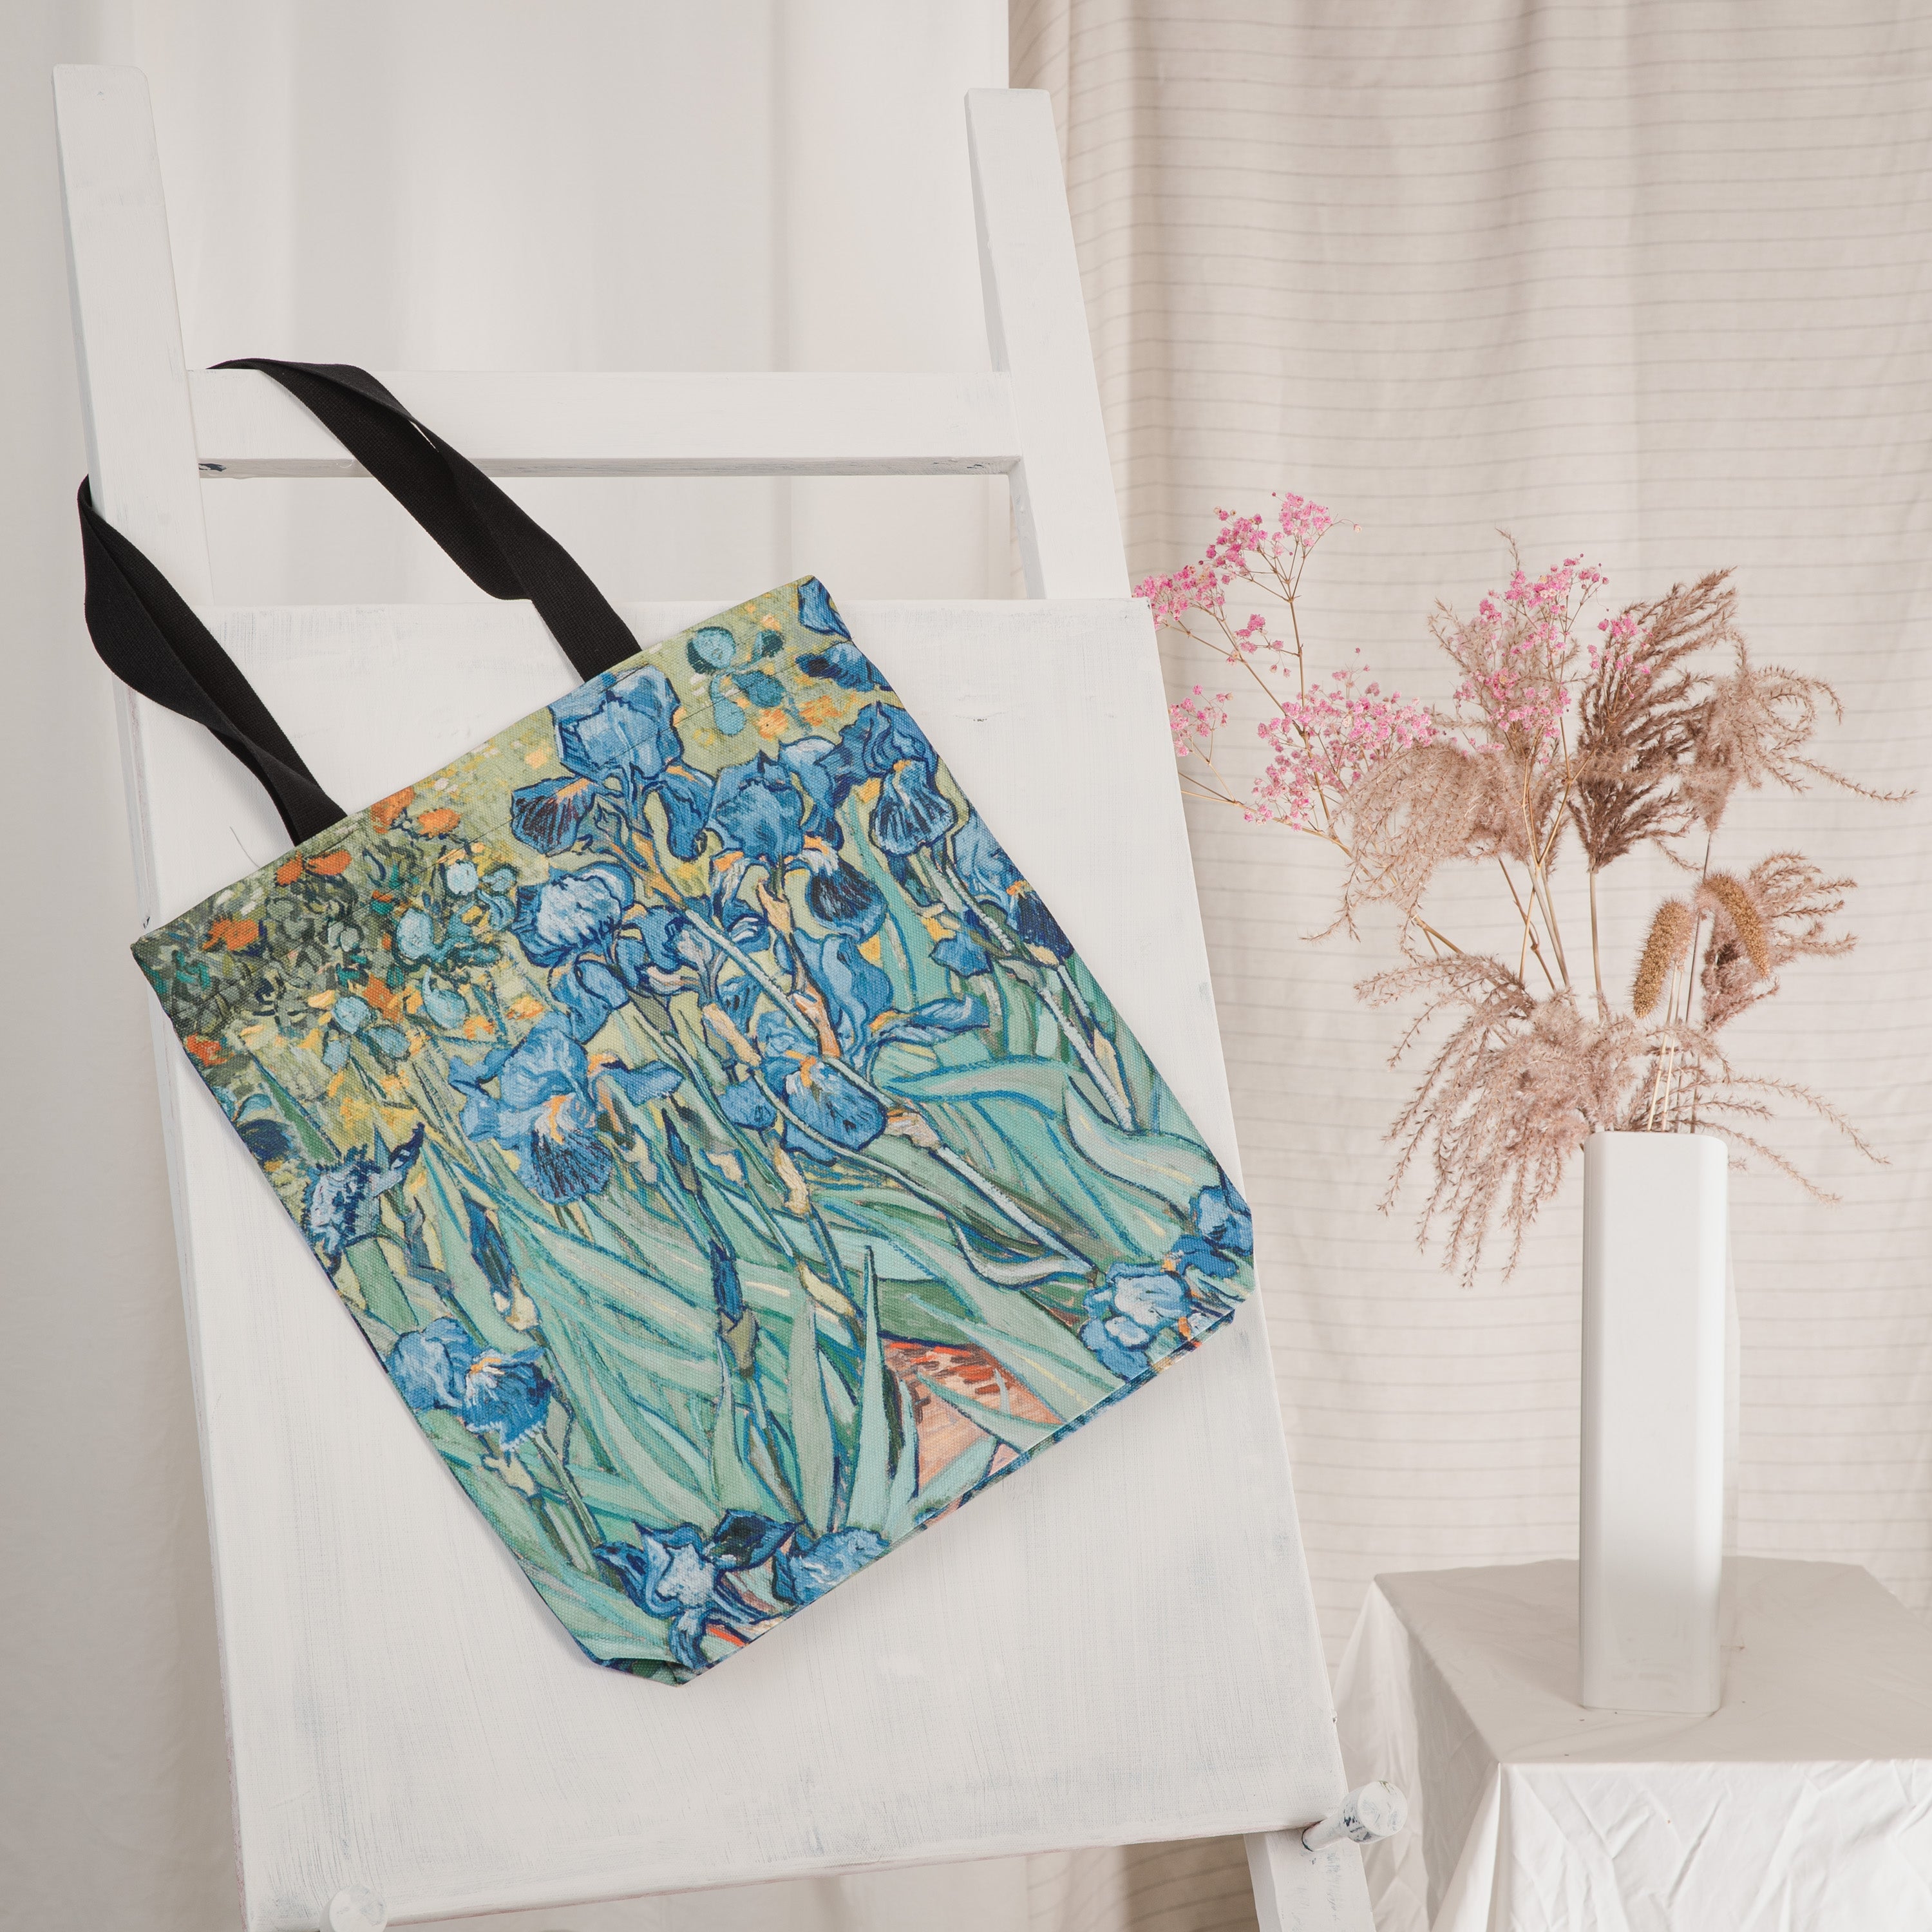 Shopping bag Vincent van Gogh "Irises"